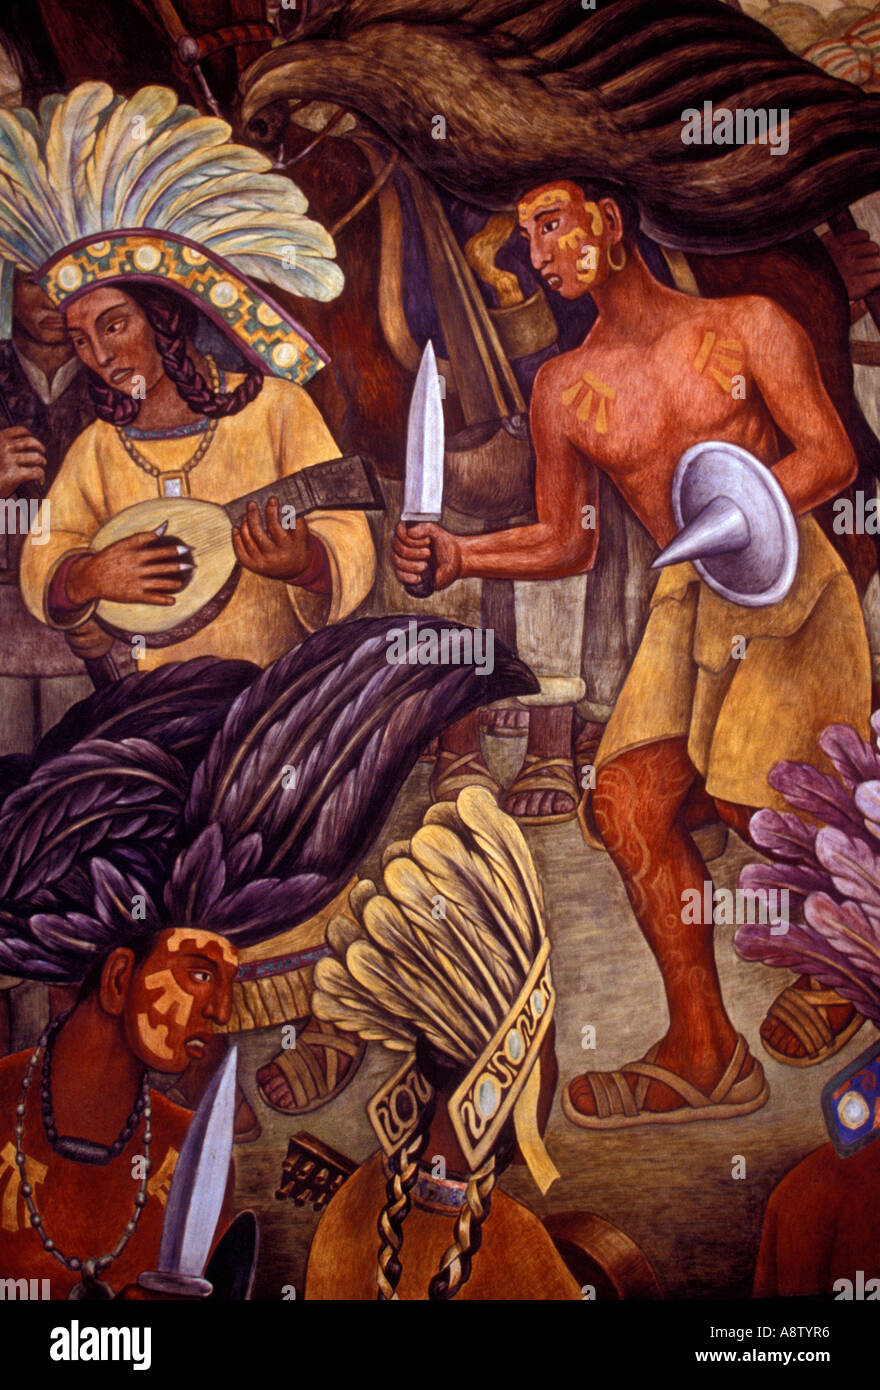 mural, Dance of the Huichilobos, Danza de los Huichilobos, mural by Diego Rivera, Palacio de Bellas Artes, Fine Arts Museum, Mexico City, Mexico Stock Photo